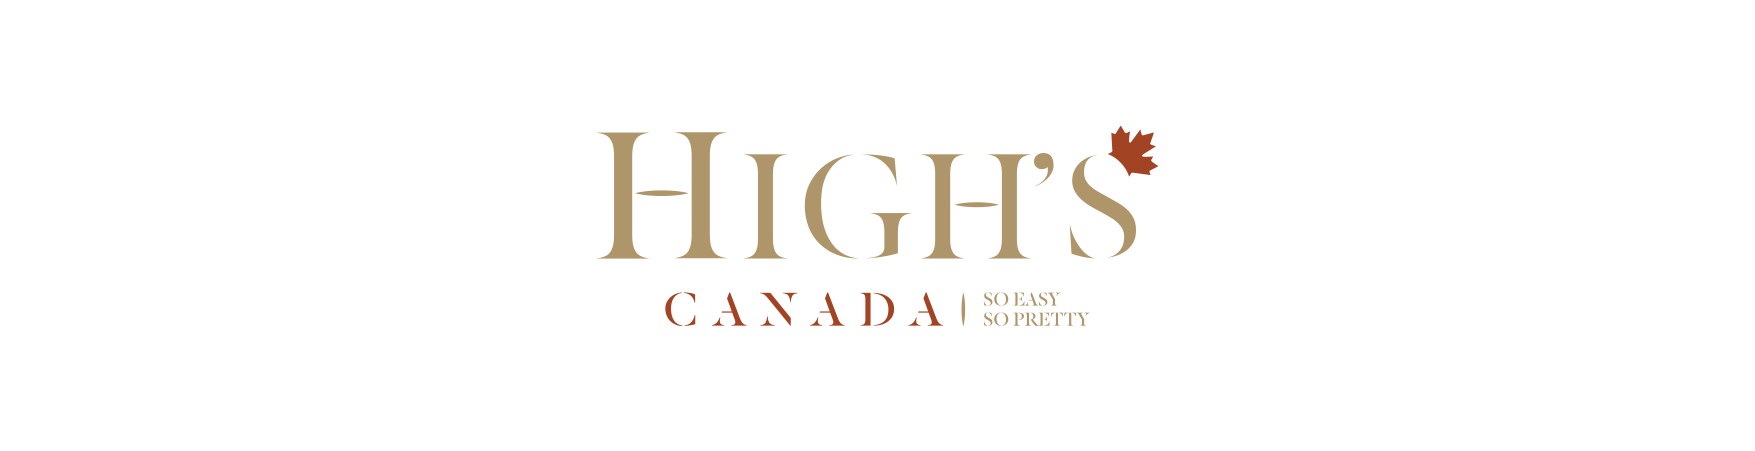 High's Canada